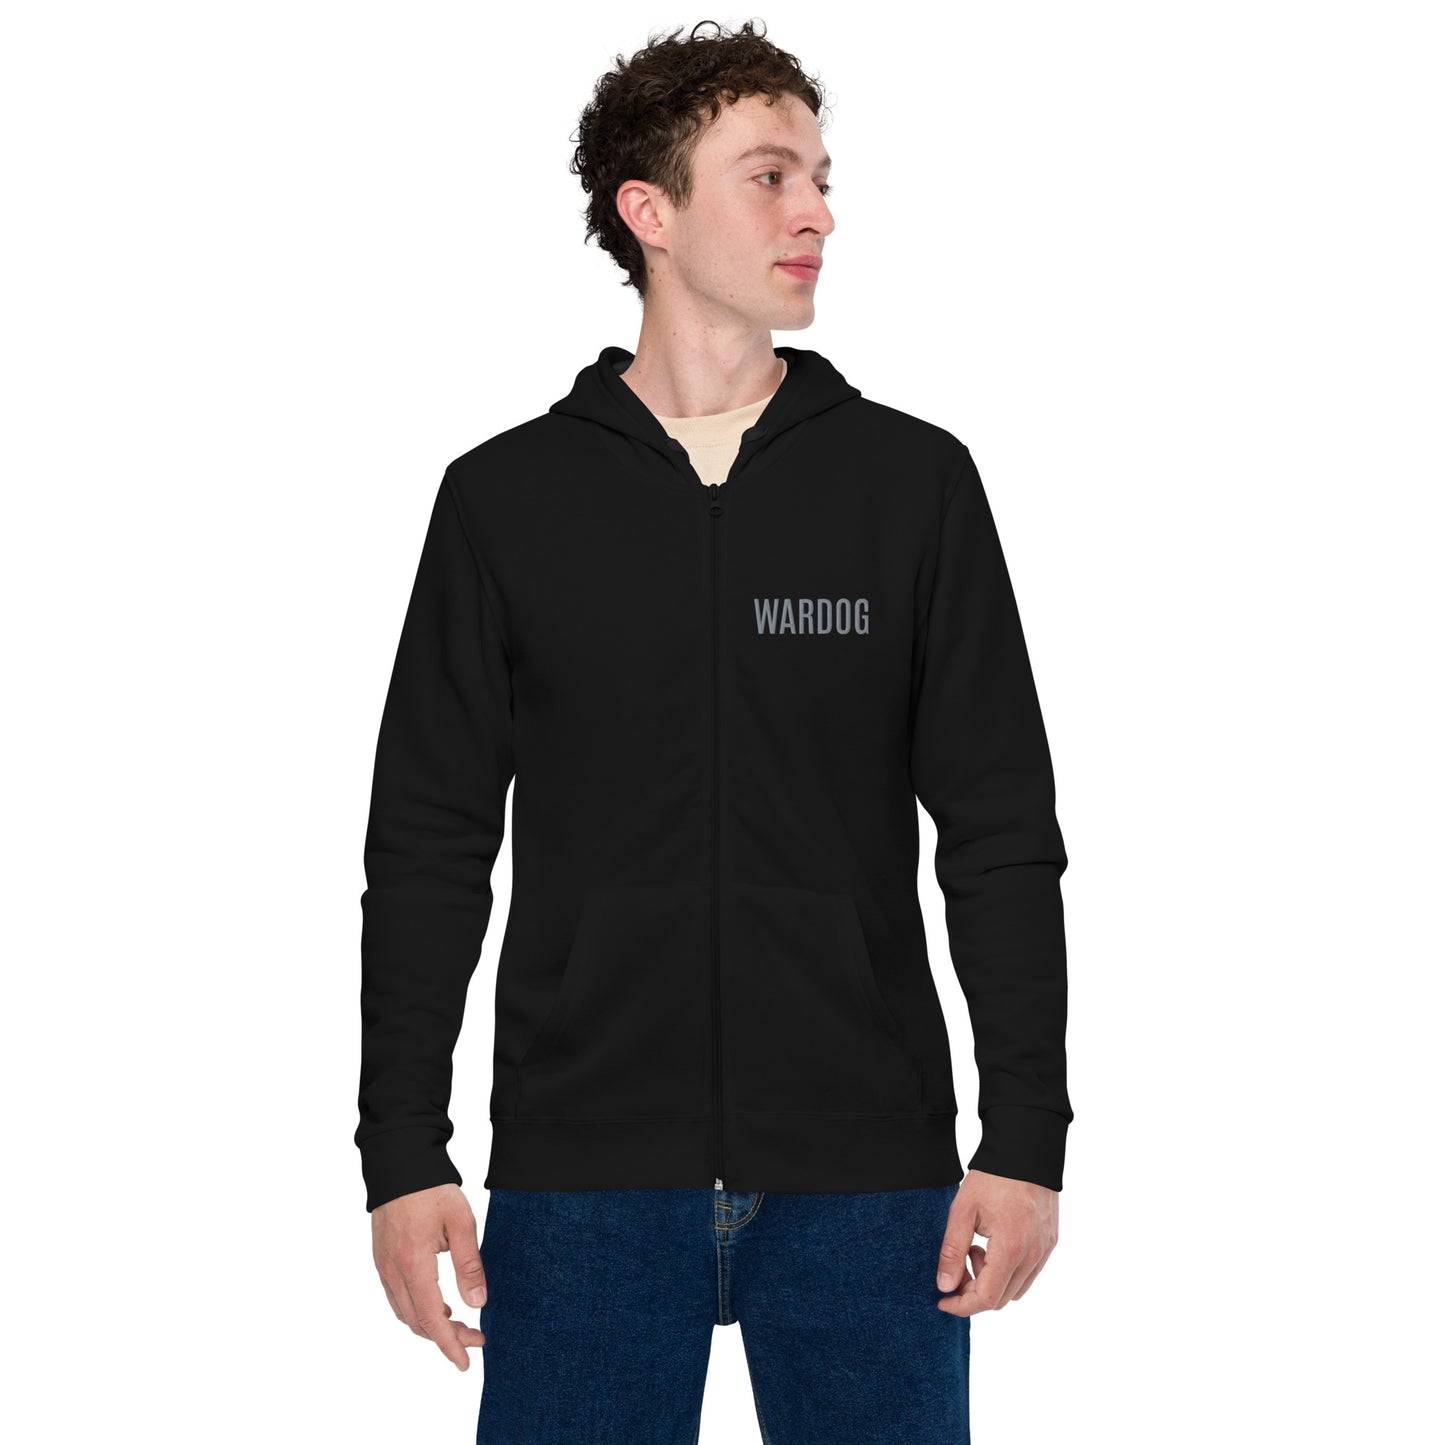 Unisex basic WARDOG zip hoodie